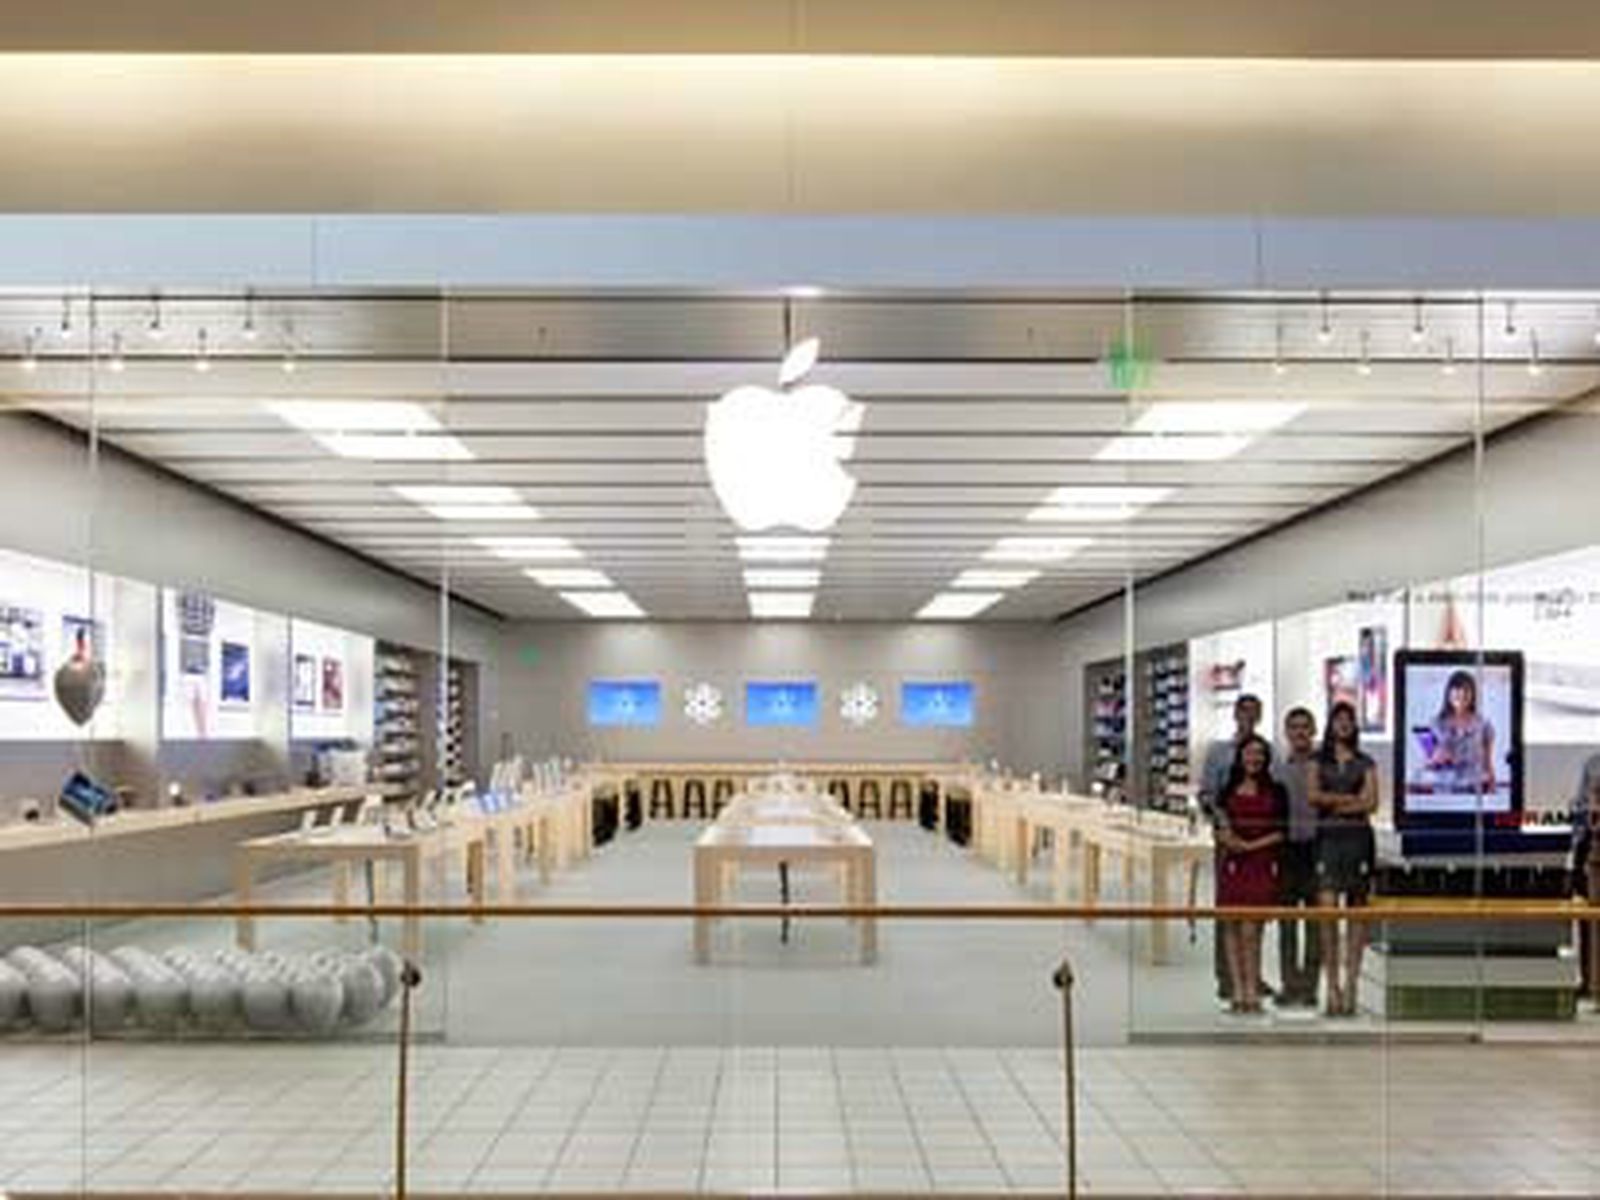 apple store interior